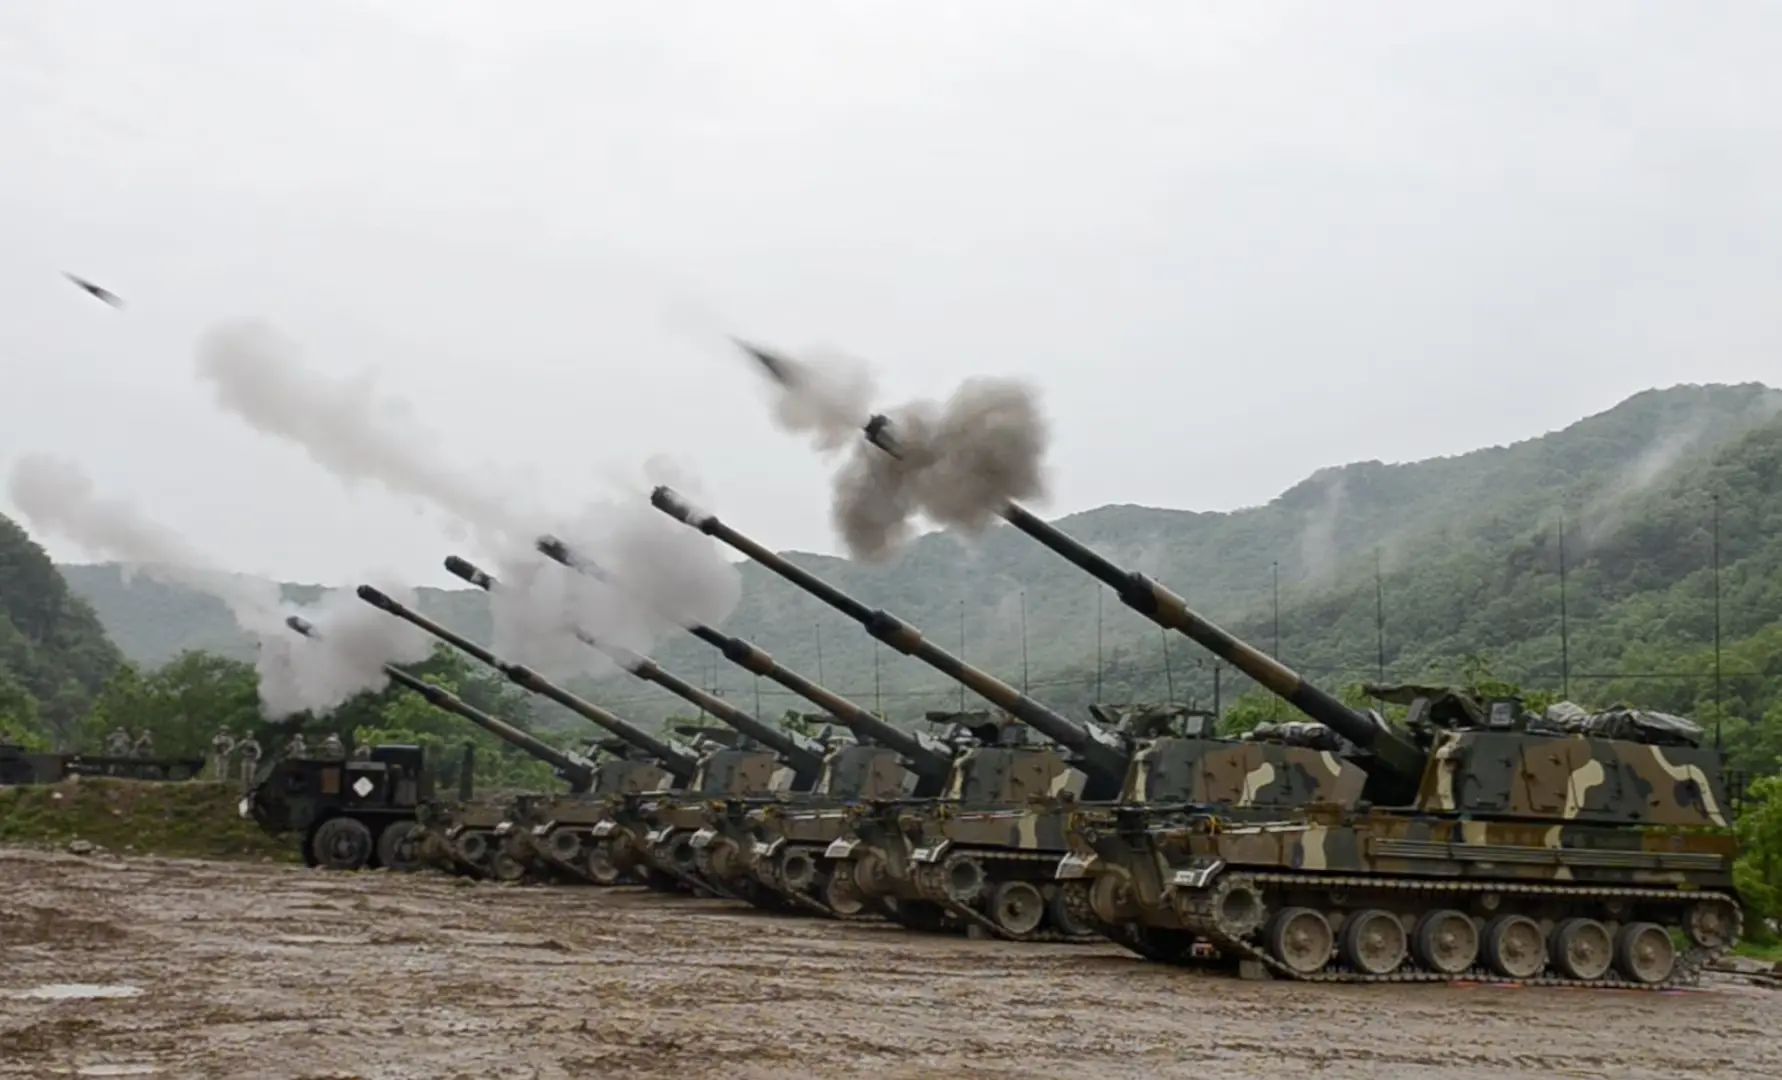 Artillery firing in Korea